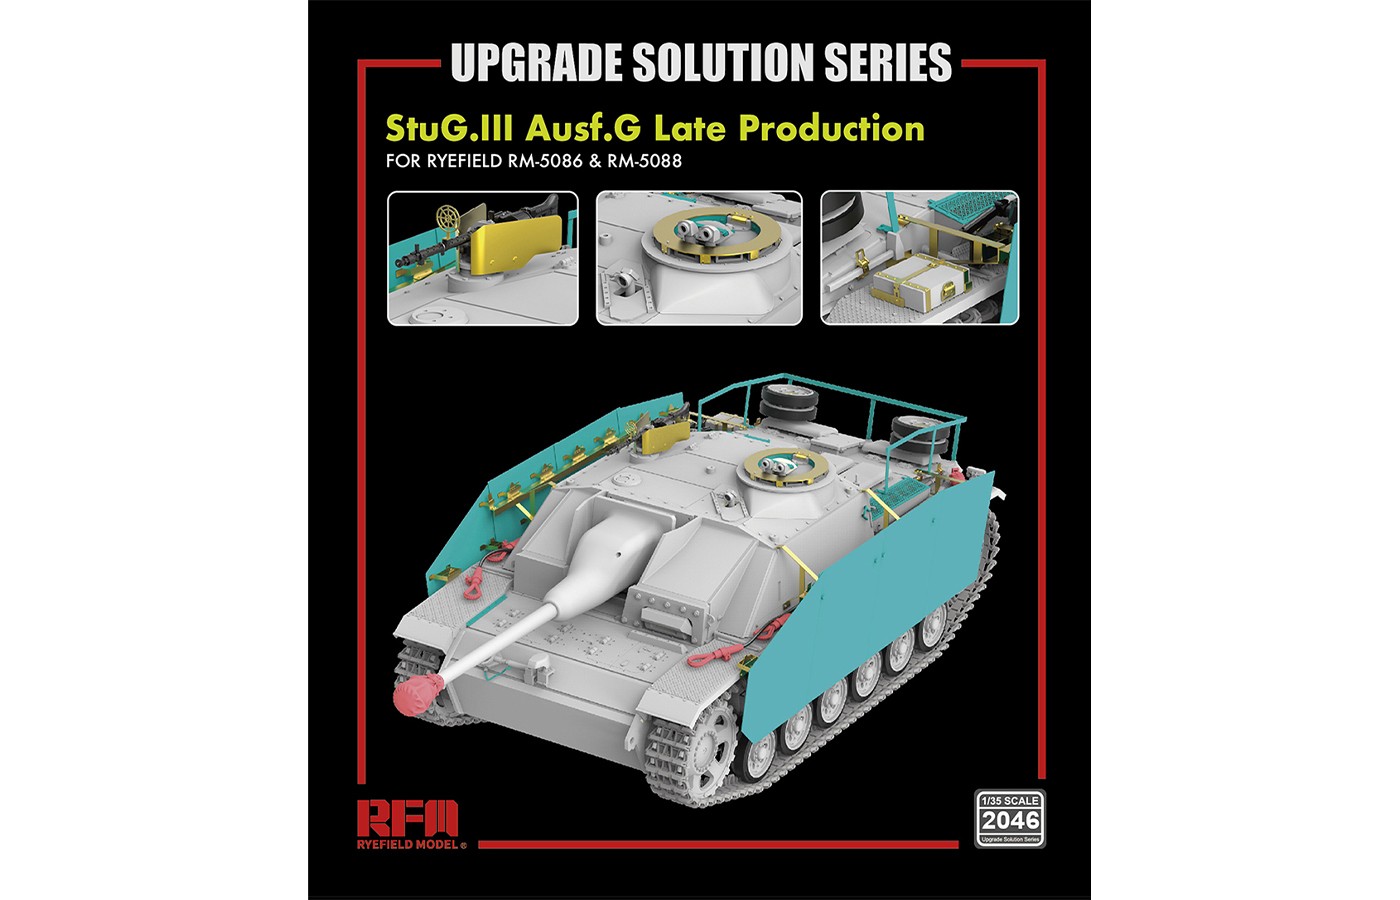 RM-2046  StuG.III Ausf.G Late Production  UPGRADE SOLUTION SERIES